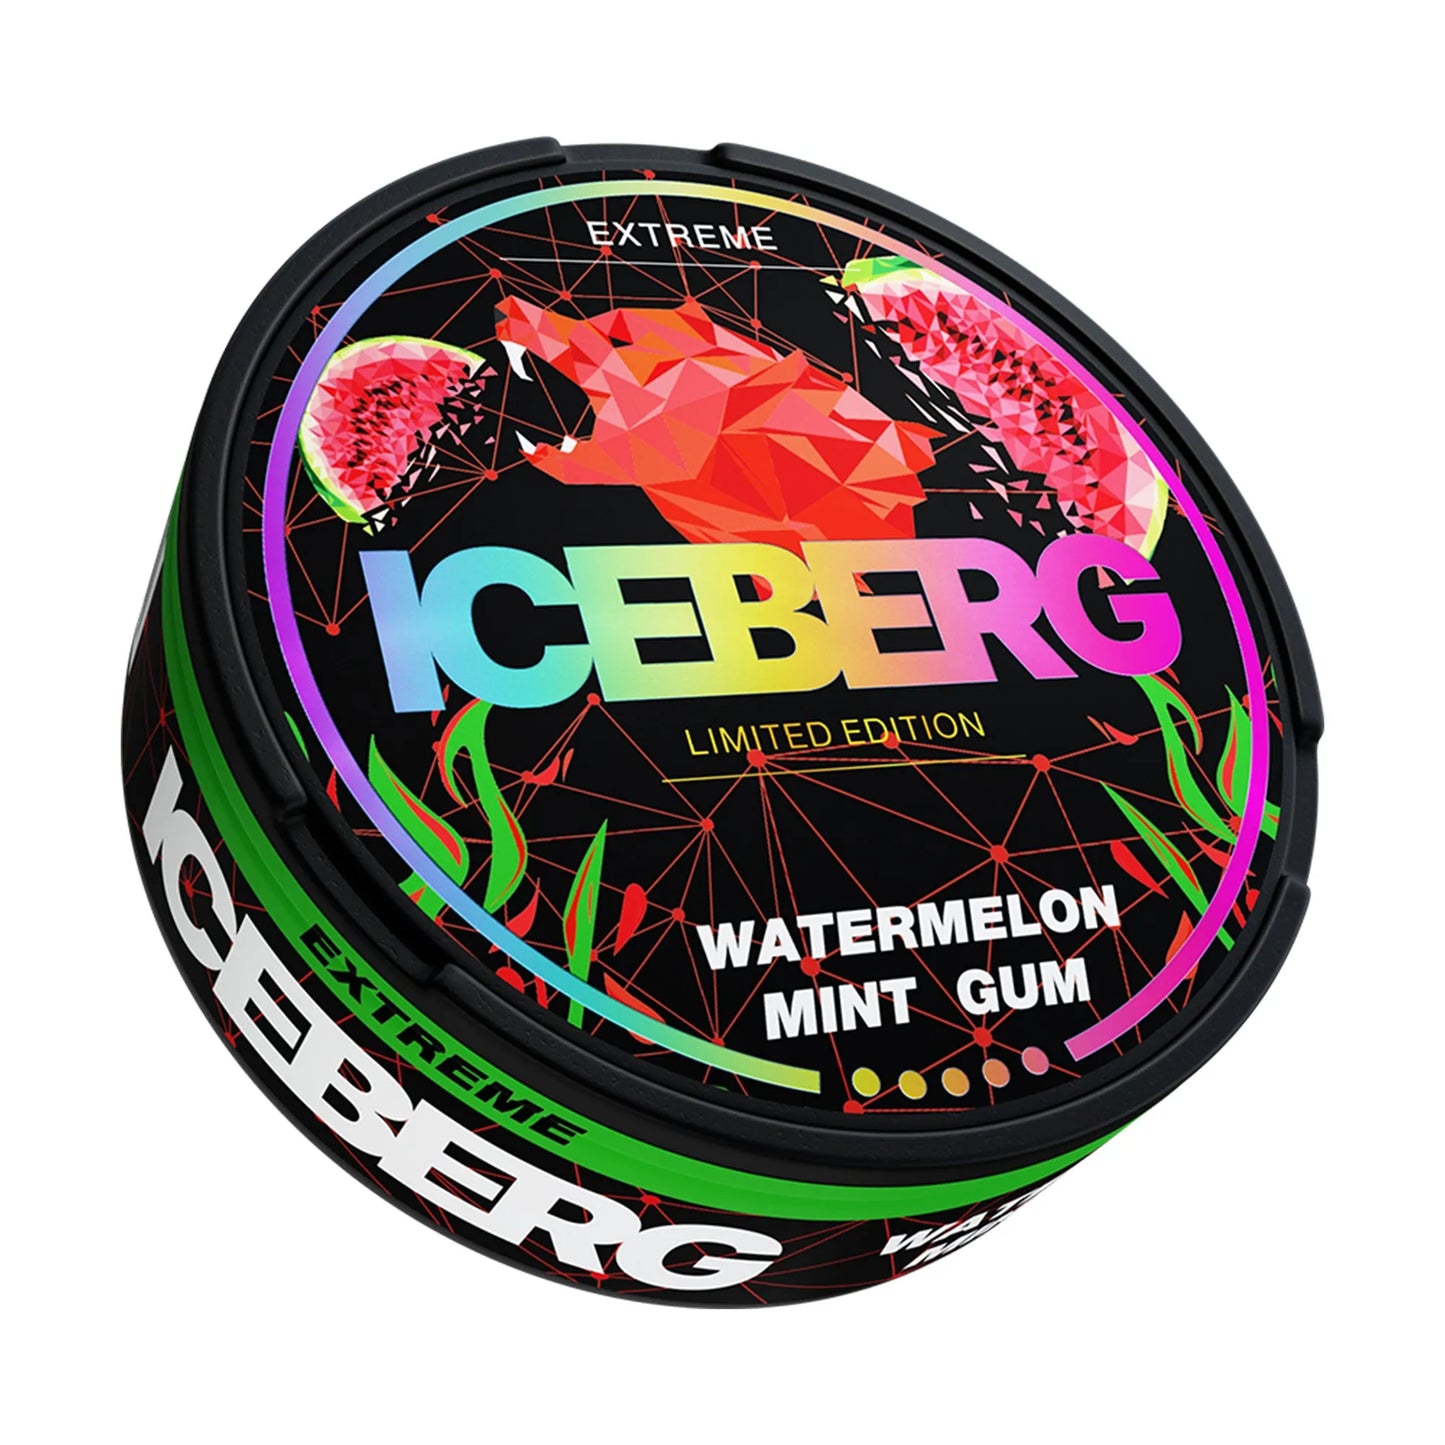 ICEBERG Watermelon Mint